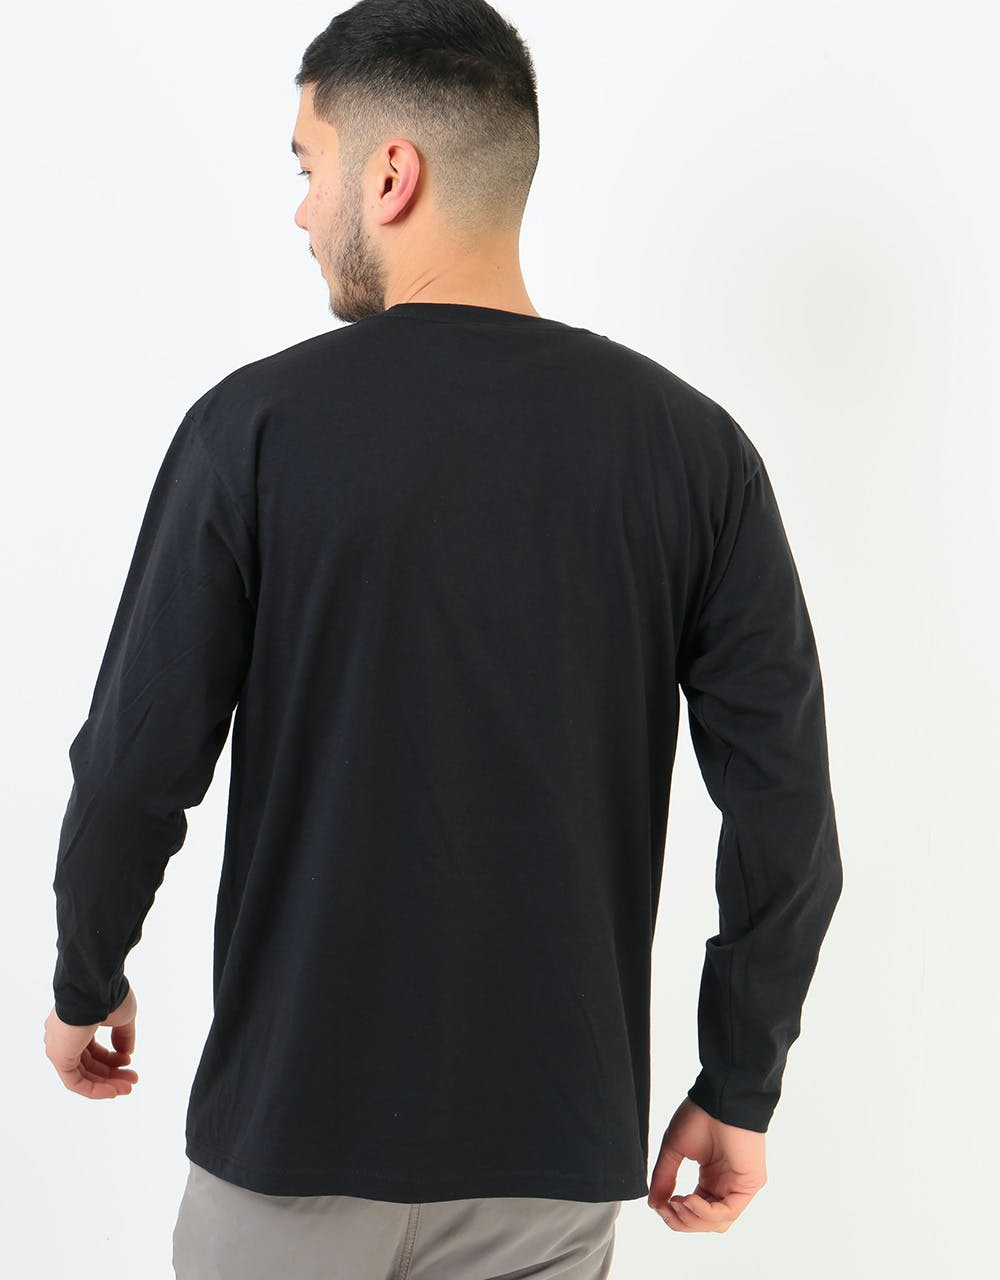 Scum Camel Smoker L/S T-Shirt - Black